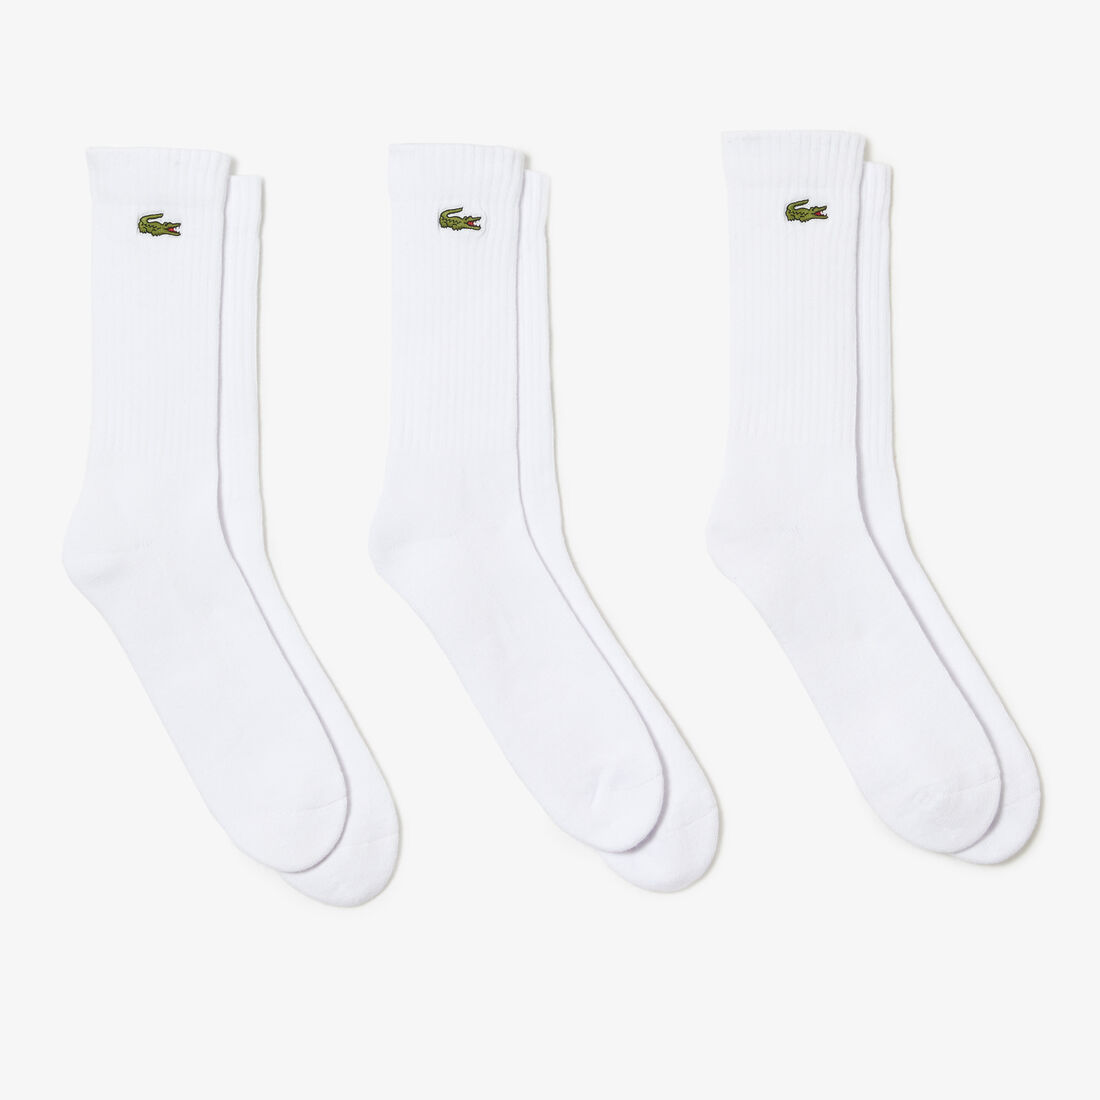 Men's Lacoste SPORT High-Cut Socks Three-Pack